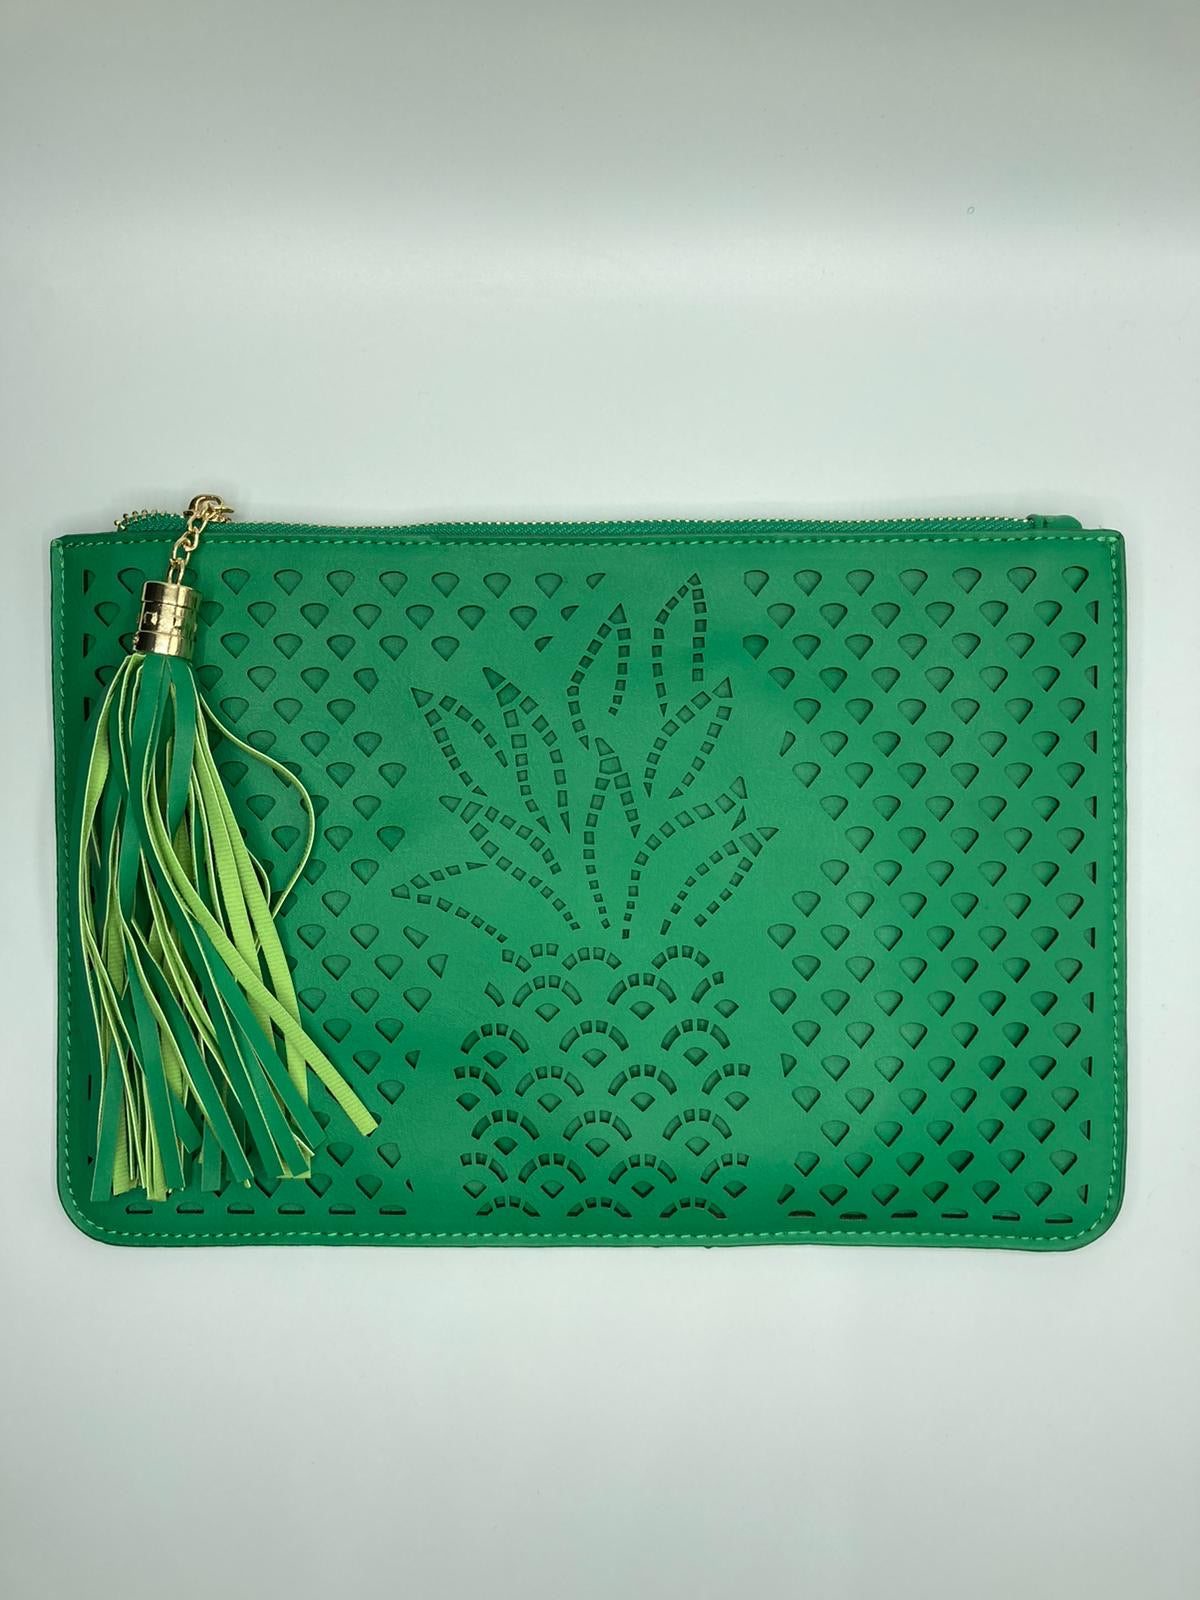 Pineapple Clutch Bag